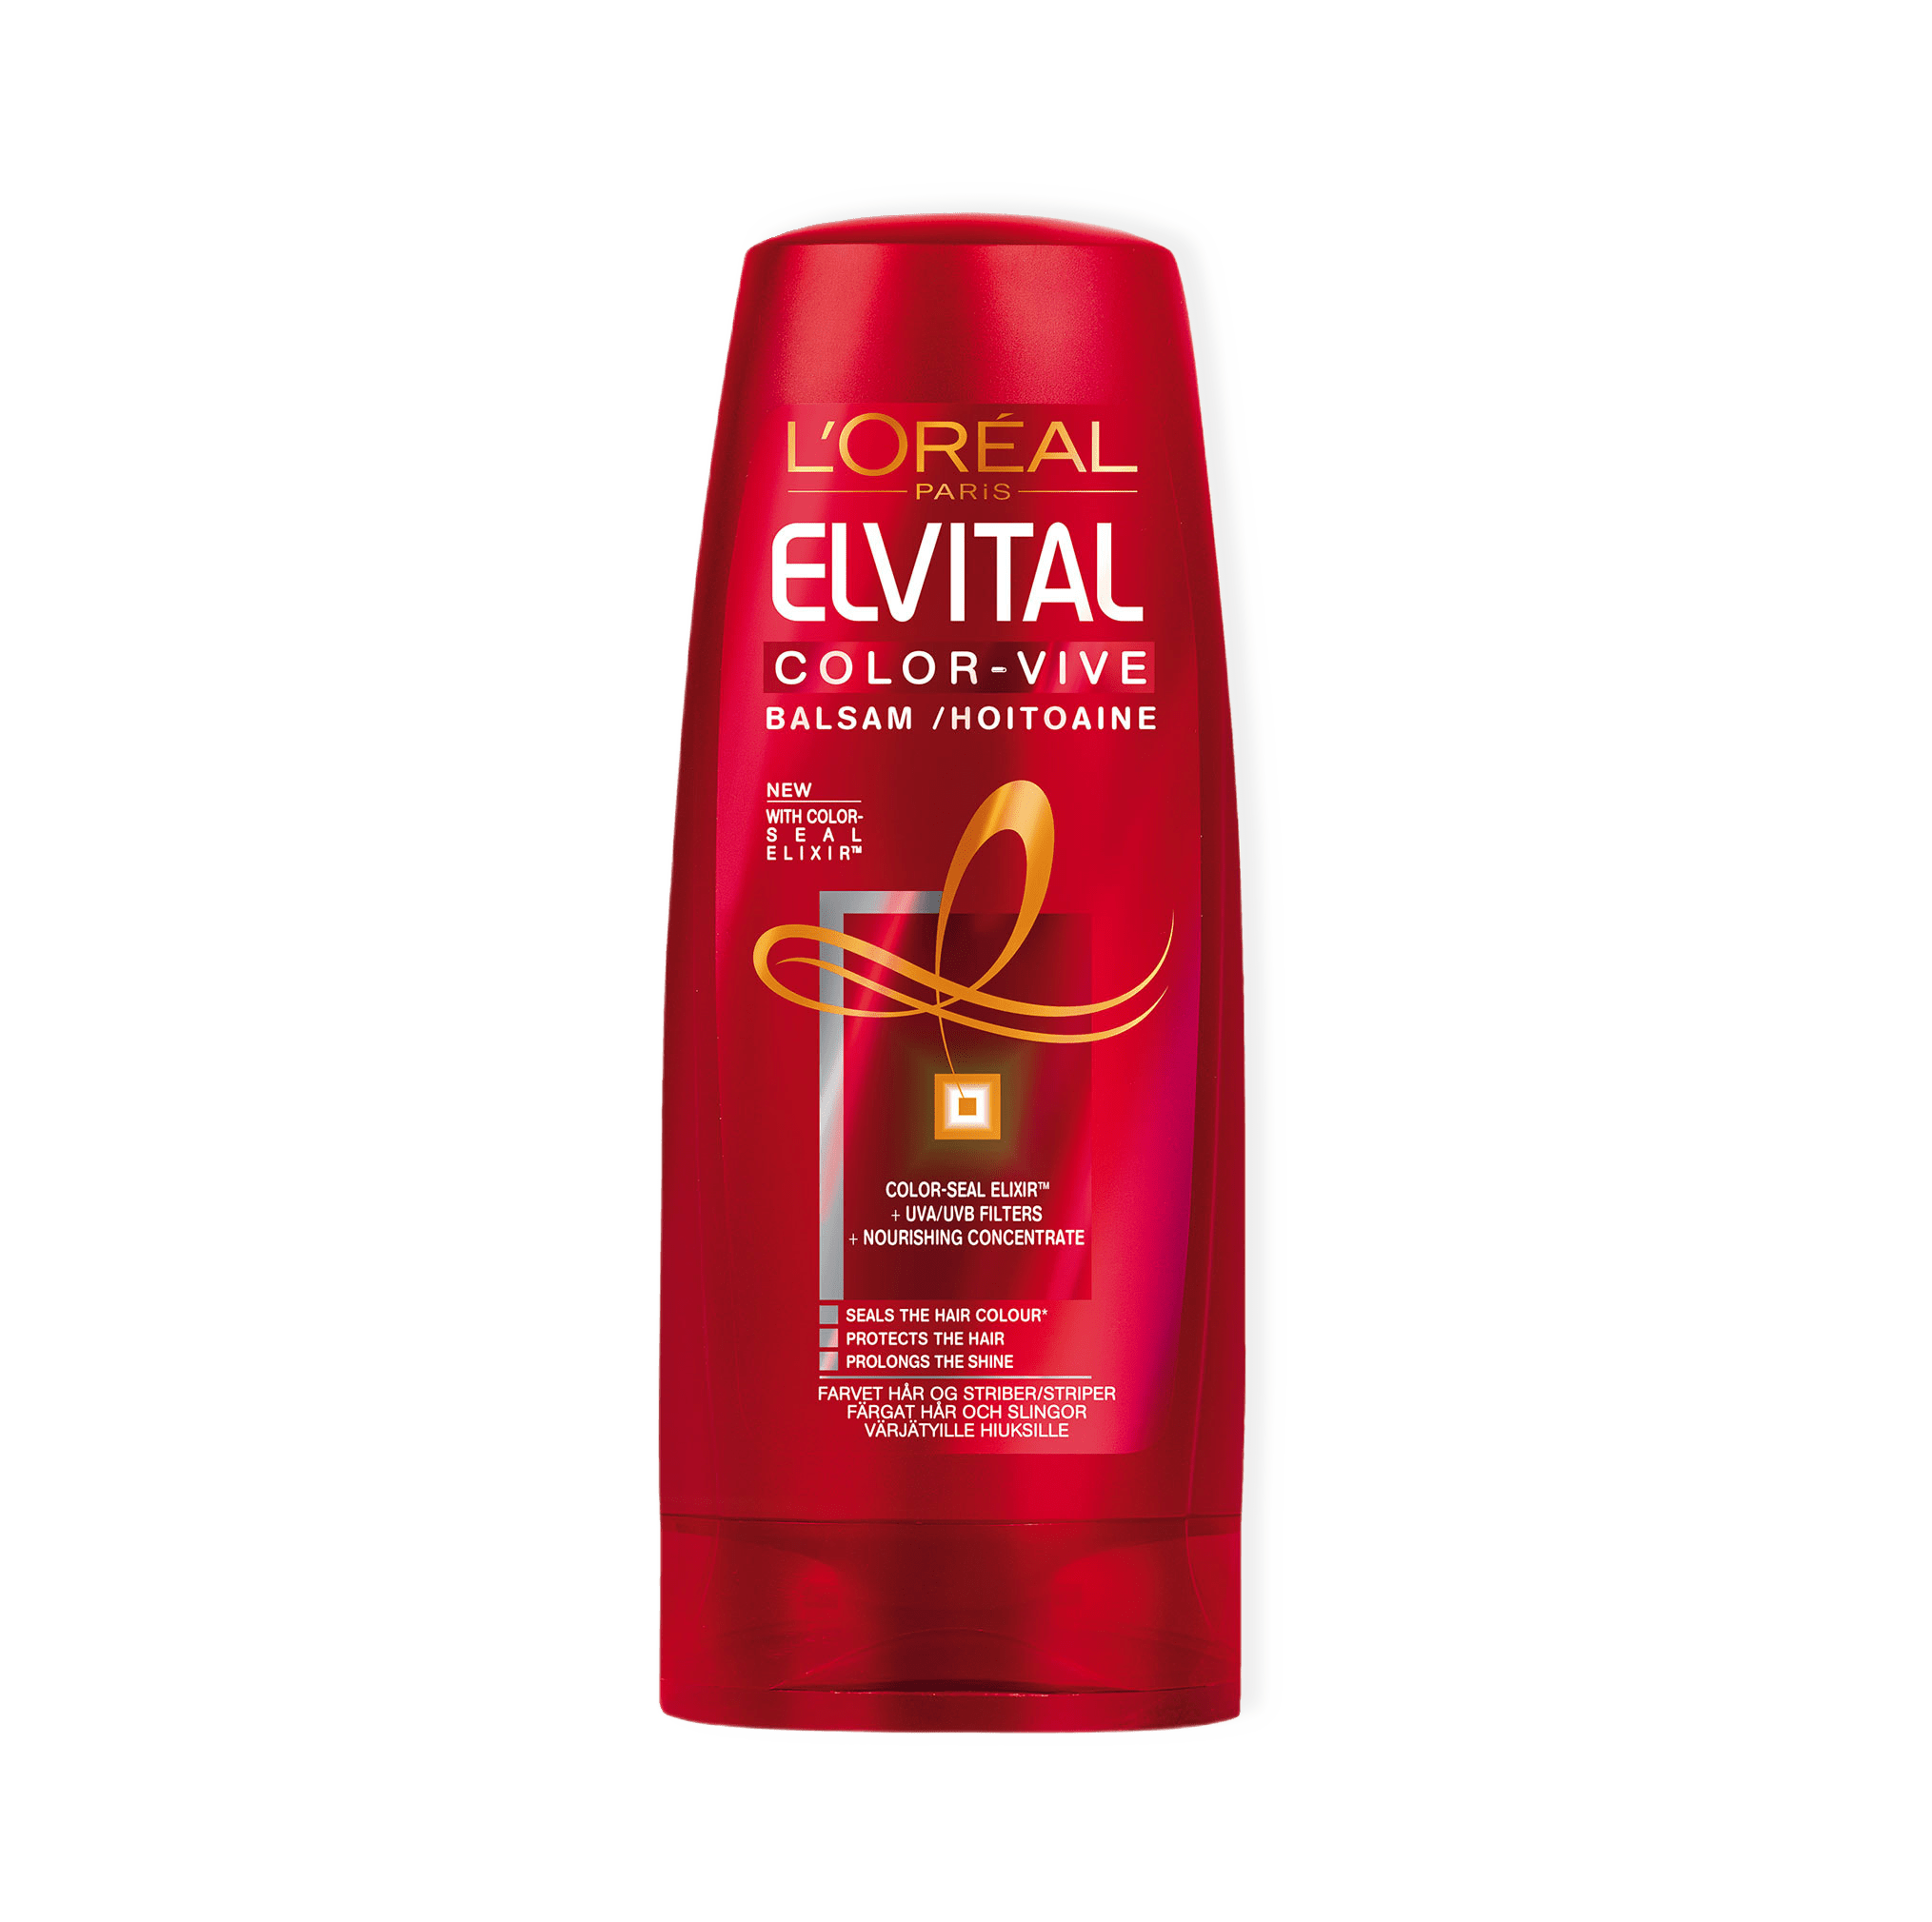 Elvital Color-Vive Balsam, 200 ml från L'Oréal Paris